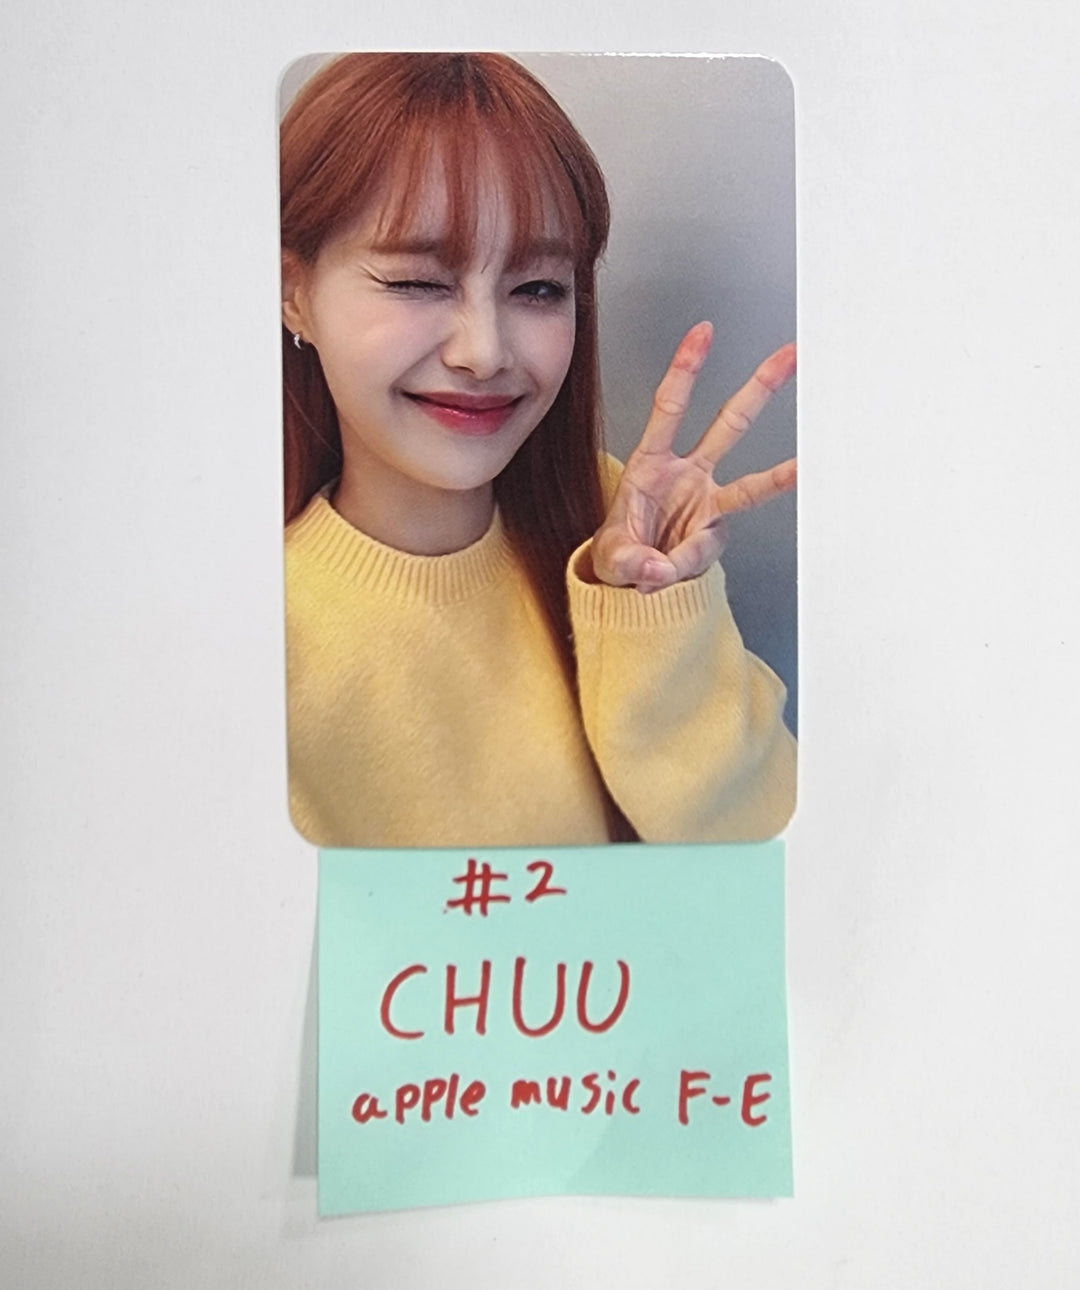 CHUU "Howl" - Apple Music Fansign Event Photocard [23.11.01]